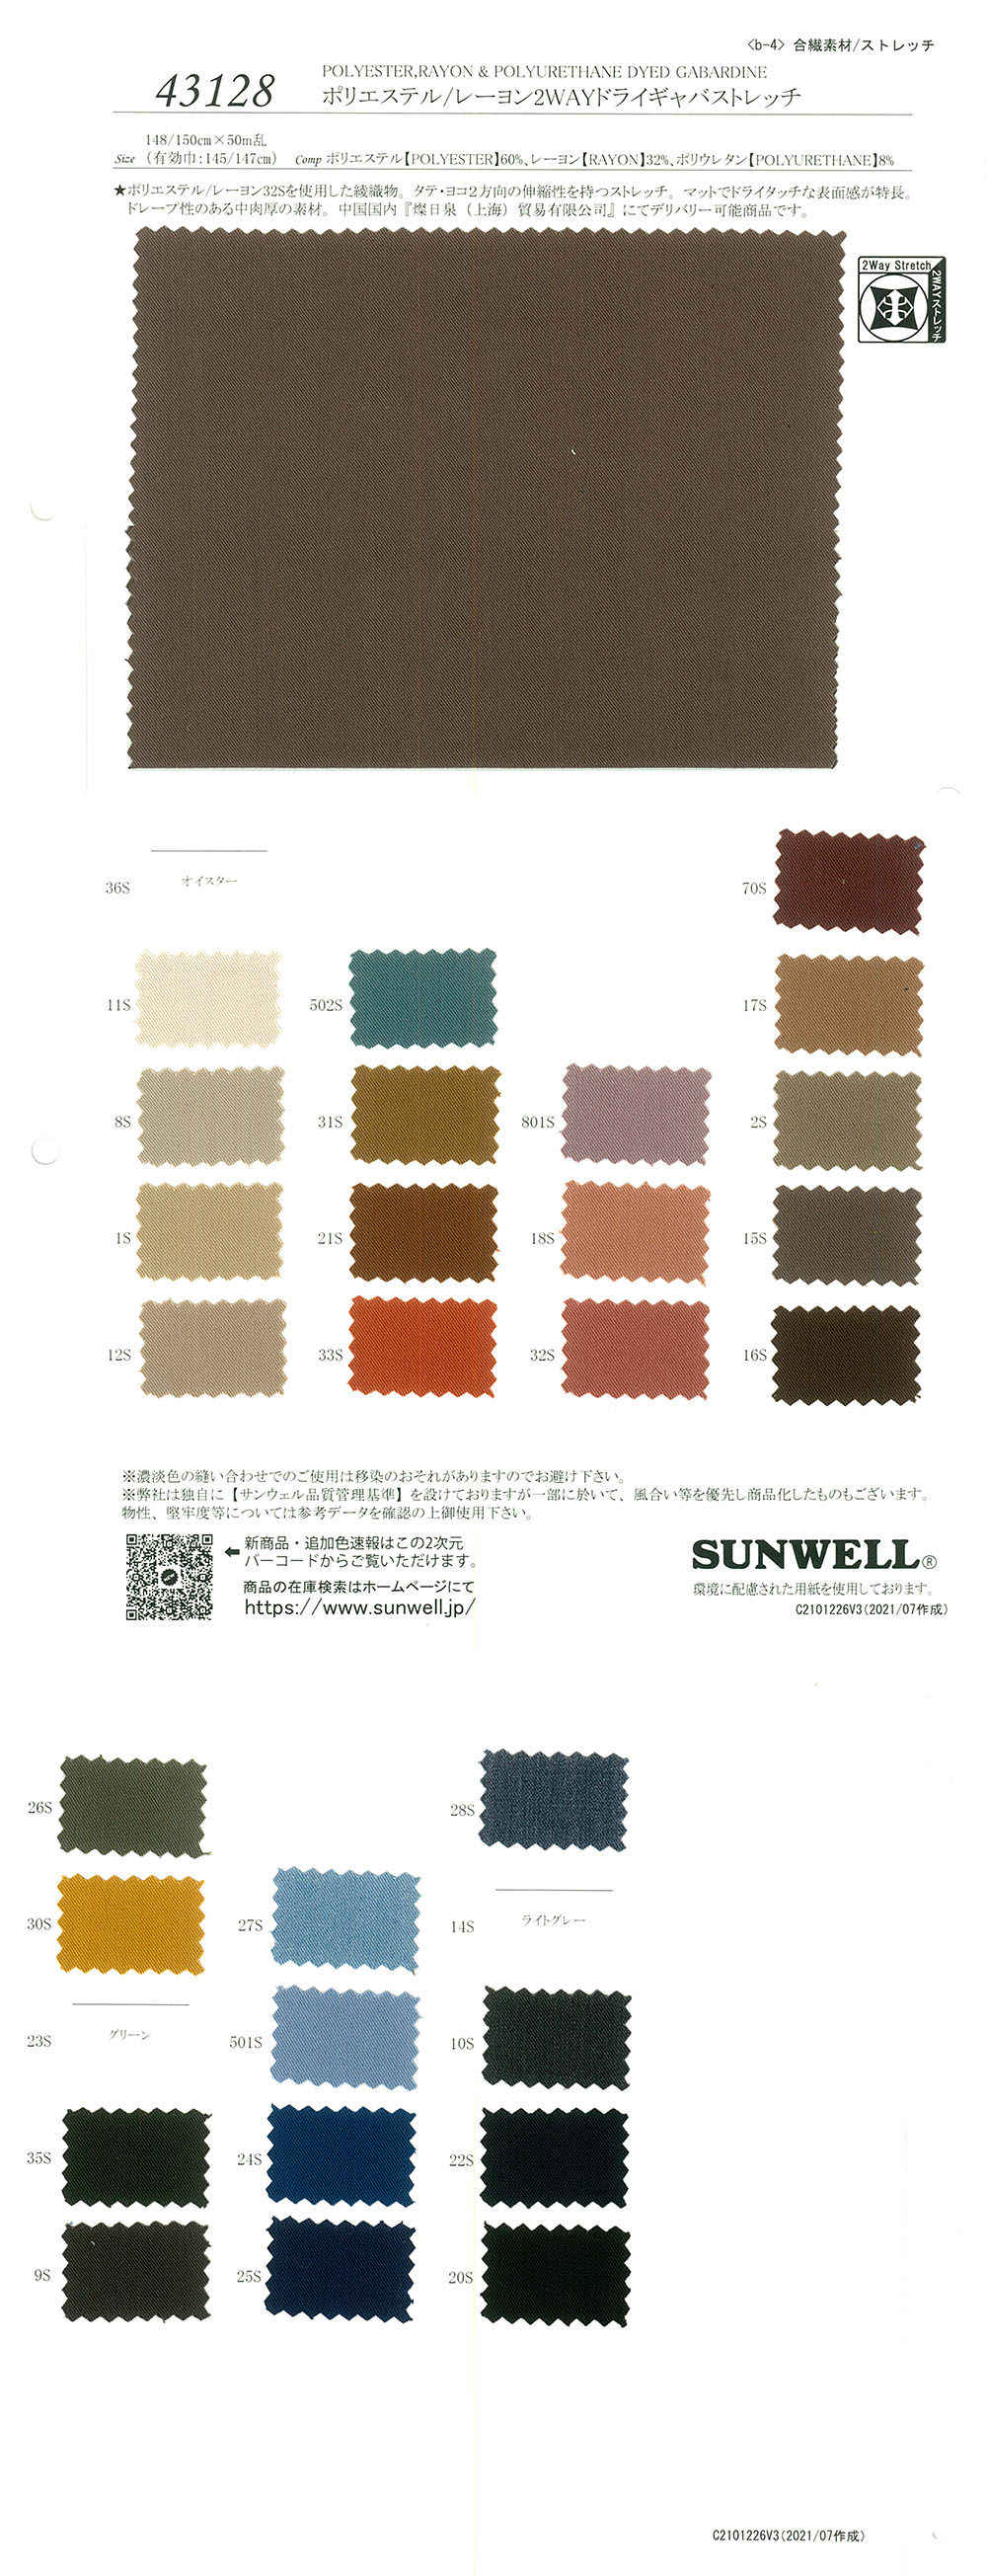 43128 Polyester/rayon 2-way Dry Gabardine Stretch[Textile / Fabric] SUNWELL